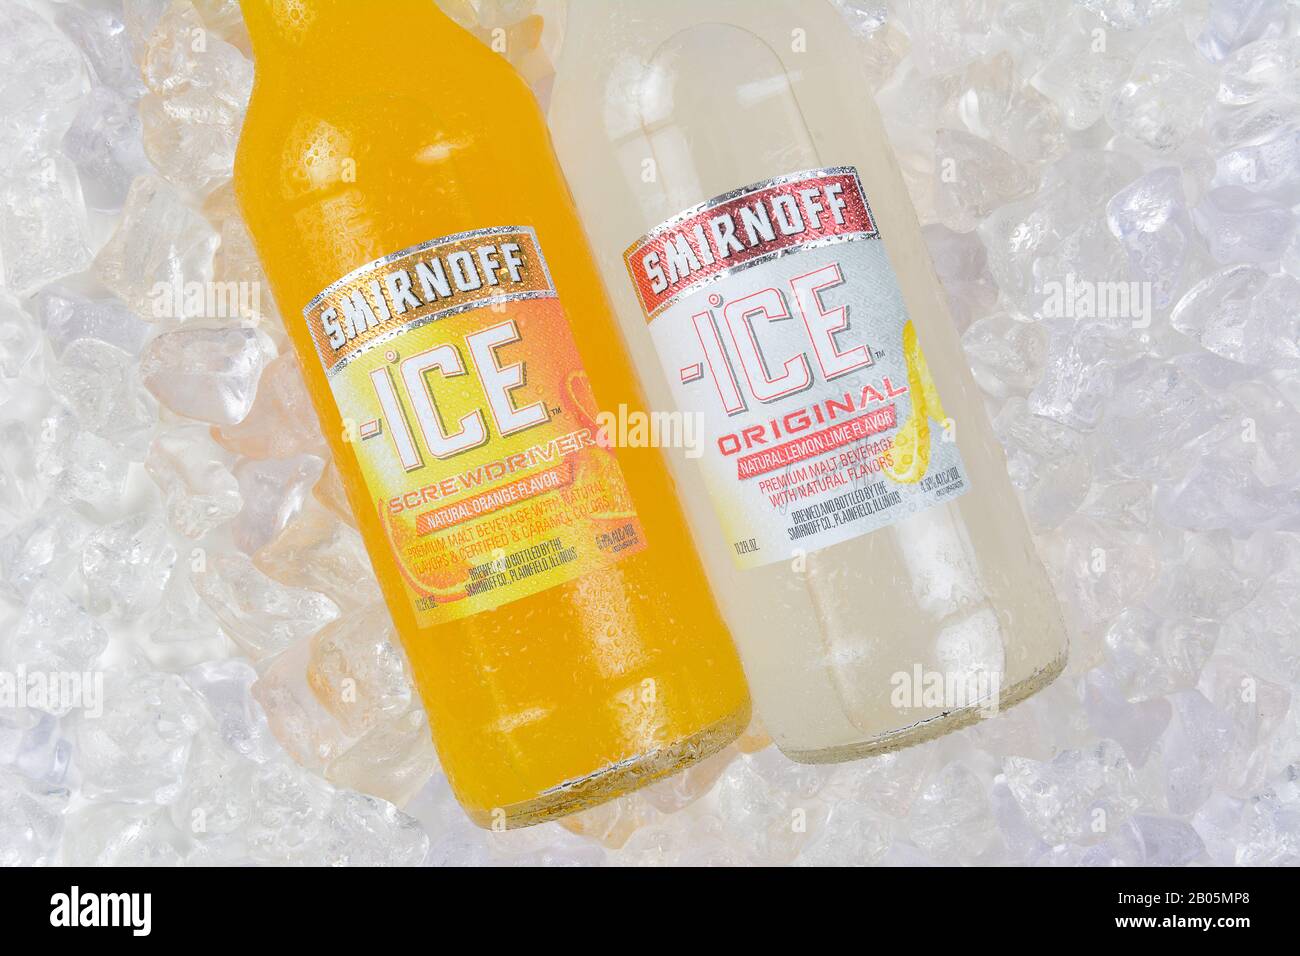 IRVINE, CA - JANUARY 4, 2018: Smirnoff Ice Original and Screwdriver. The Original Premium Flavored Malt Beverage with a delightfully crisp, citrus tas Stock Photo